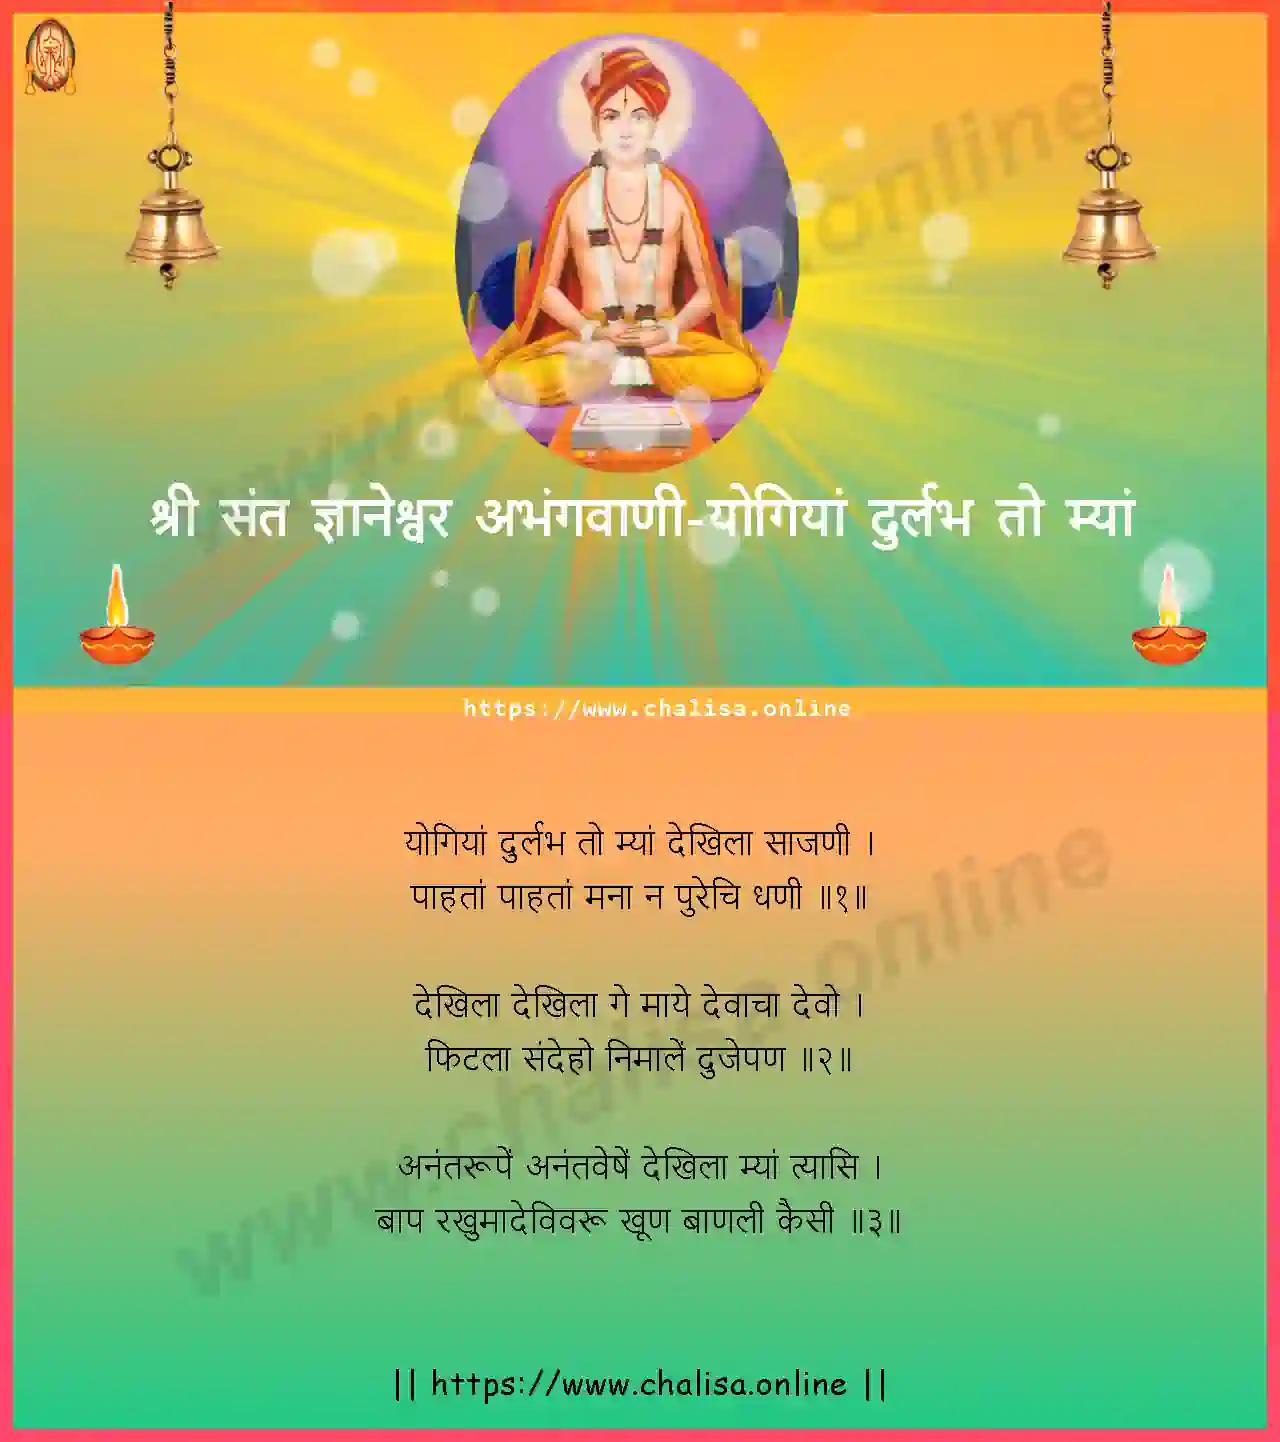 yogiya-durlabha-to-myaa-shri-sant-dnyaneshwar-abhang-marathi-lyrics-download